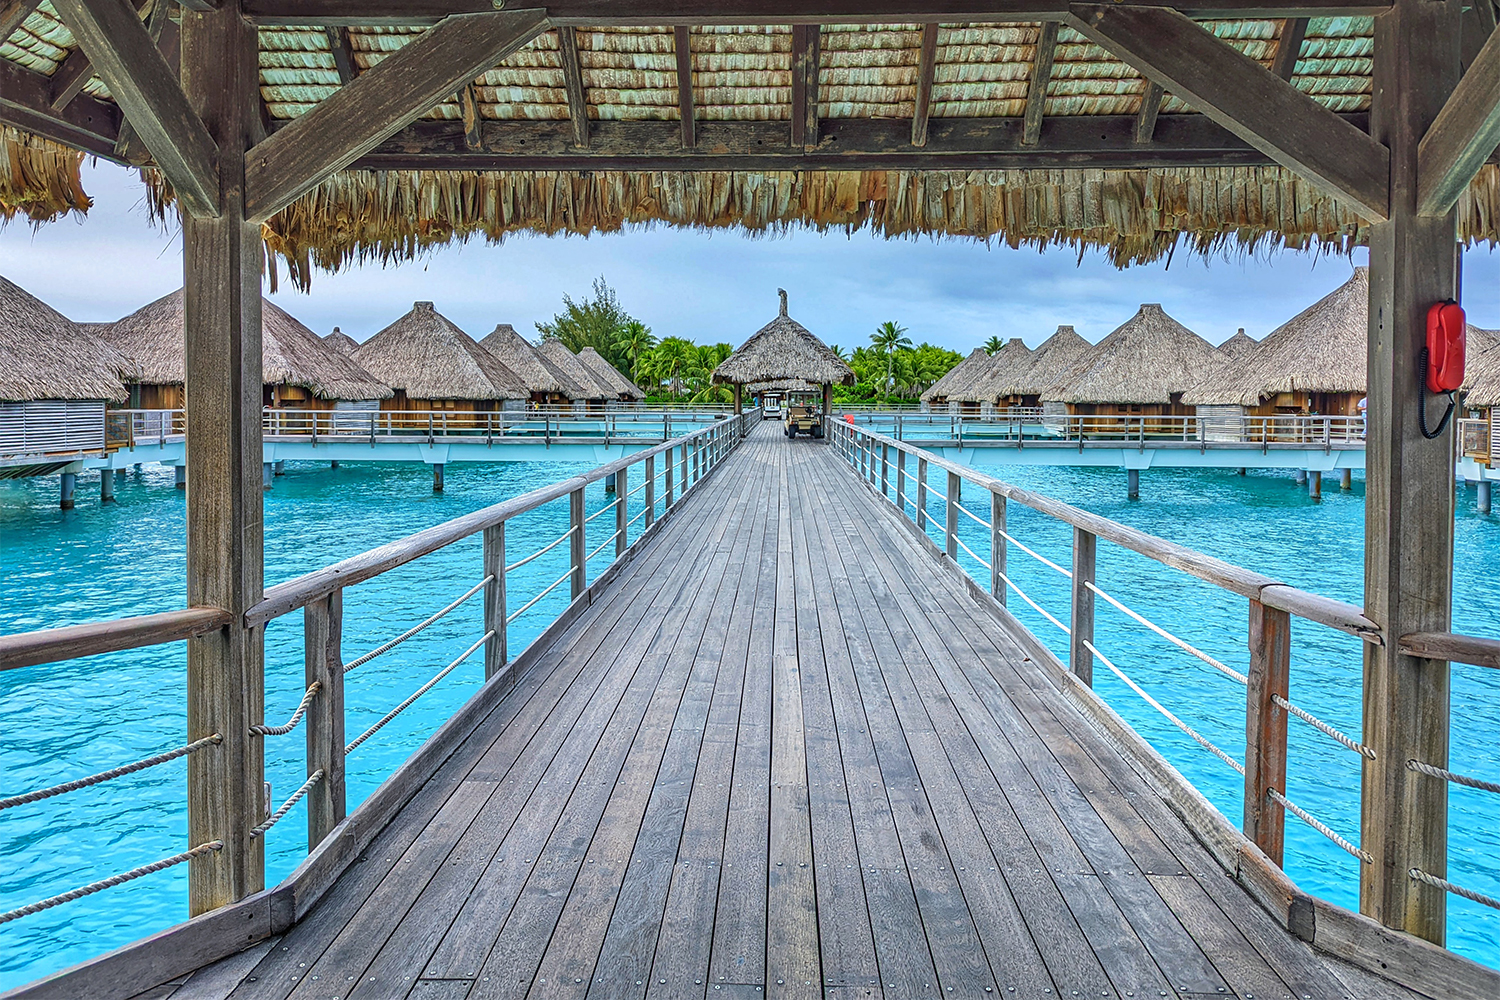 The overwater bungalows at the St. Regis Bora Bora